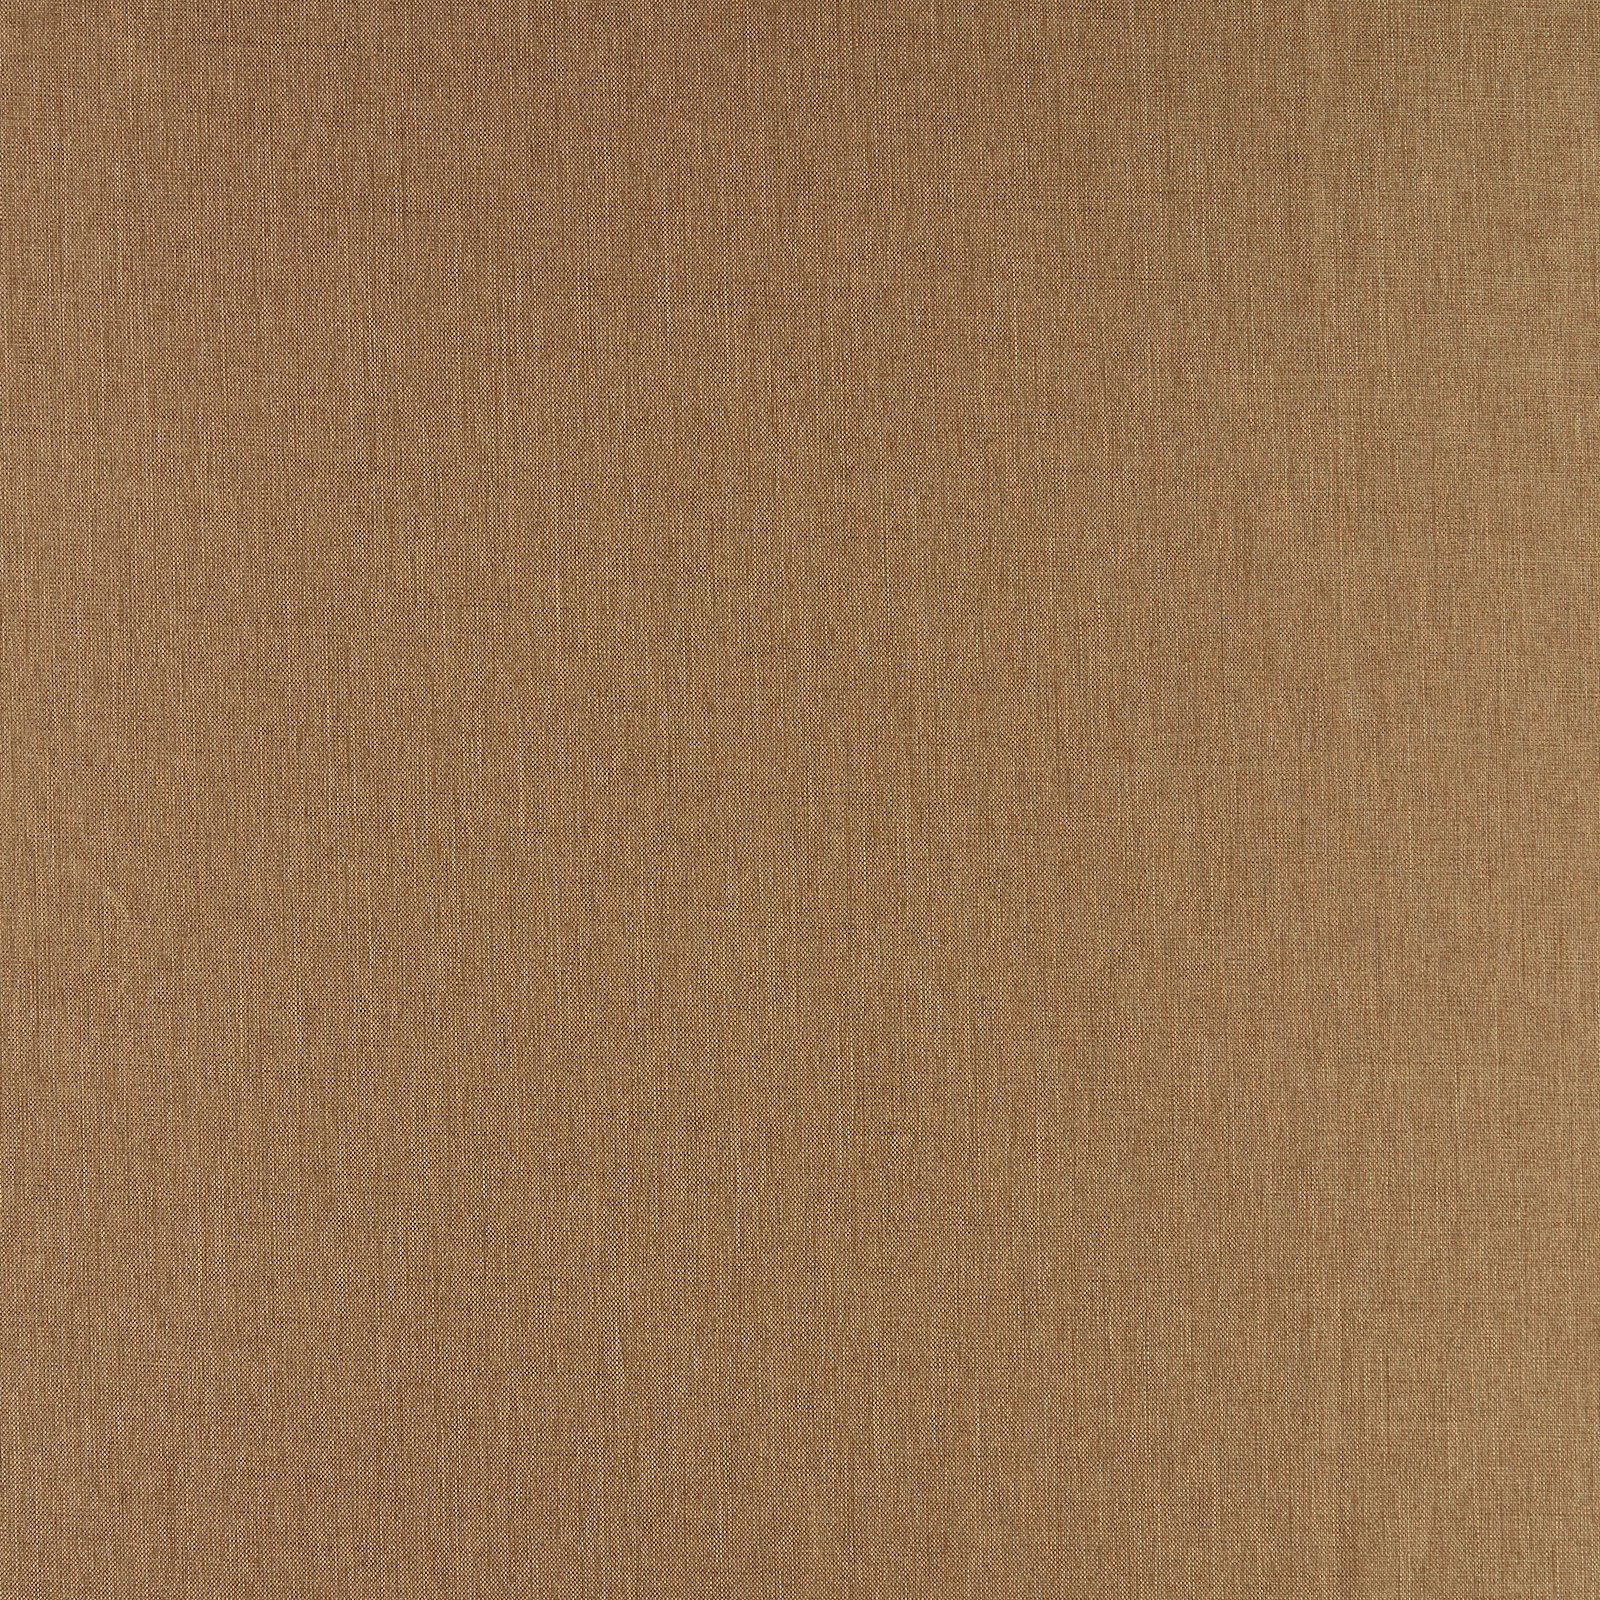 Upholstery fabric li gold brown melange 826564_pack_solid